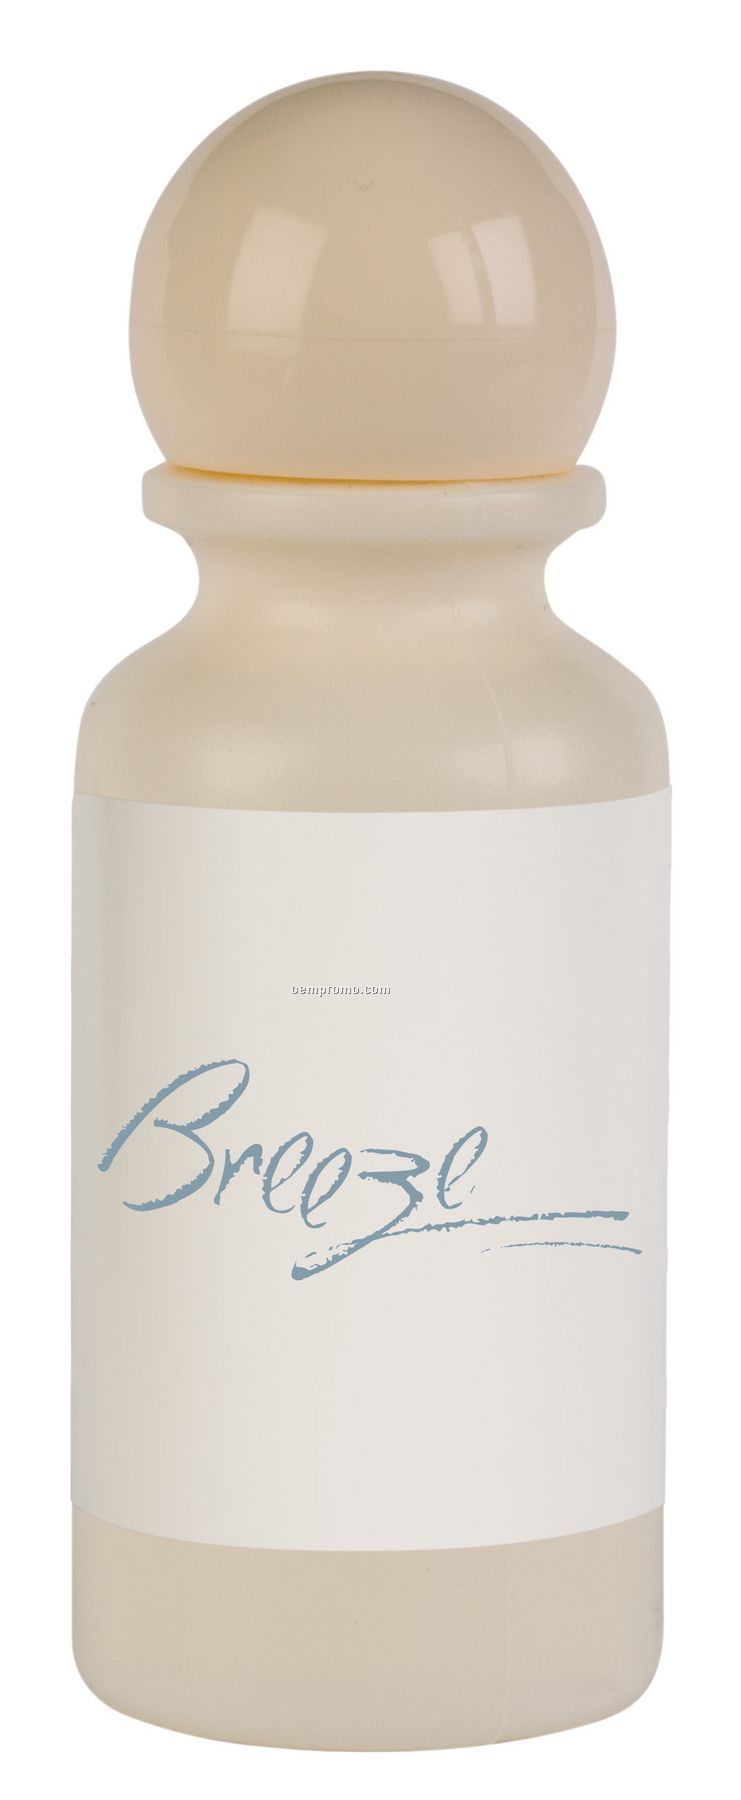 Cream Rinse Conditioner 1 Oz. Apothecary Bottle